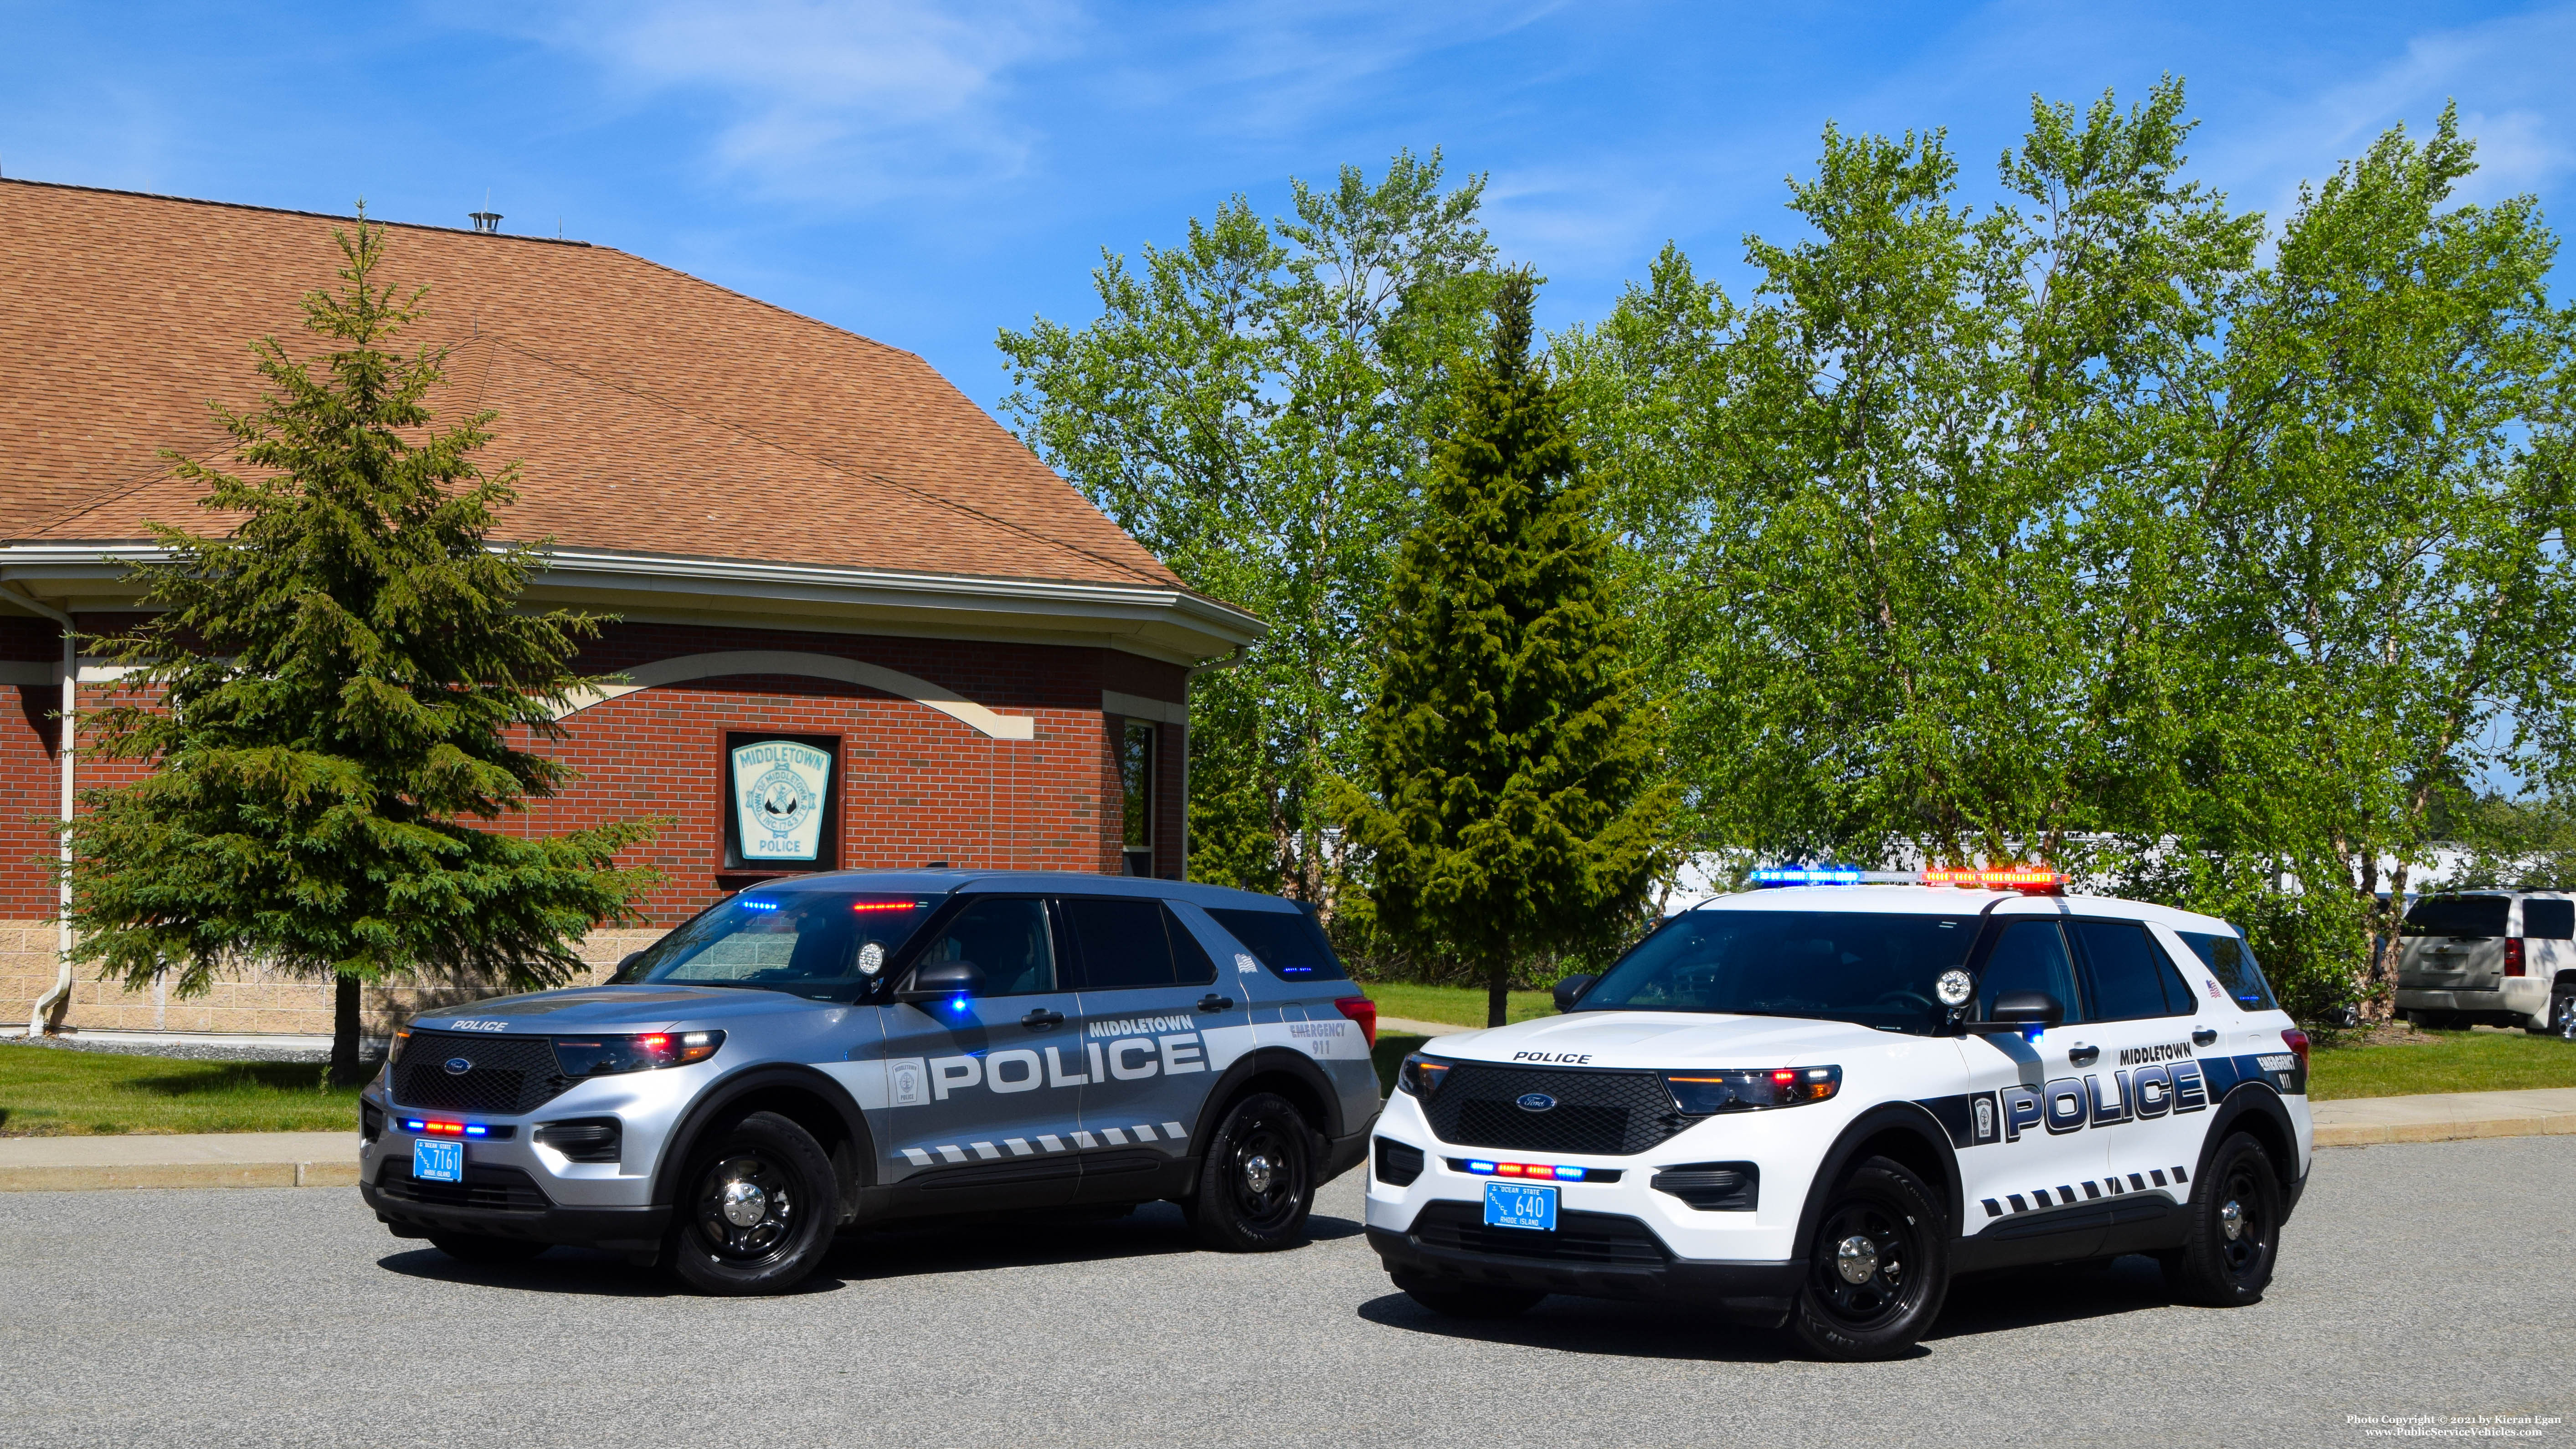 A photo  of Middletown Police
            Cruiser 640, a 2020 Ford Police Interceptor Utility Hybrid             taken by Kieran Egan